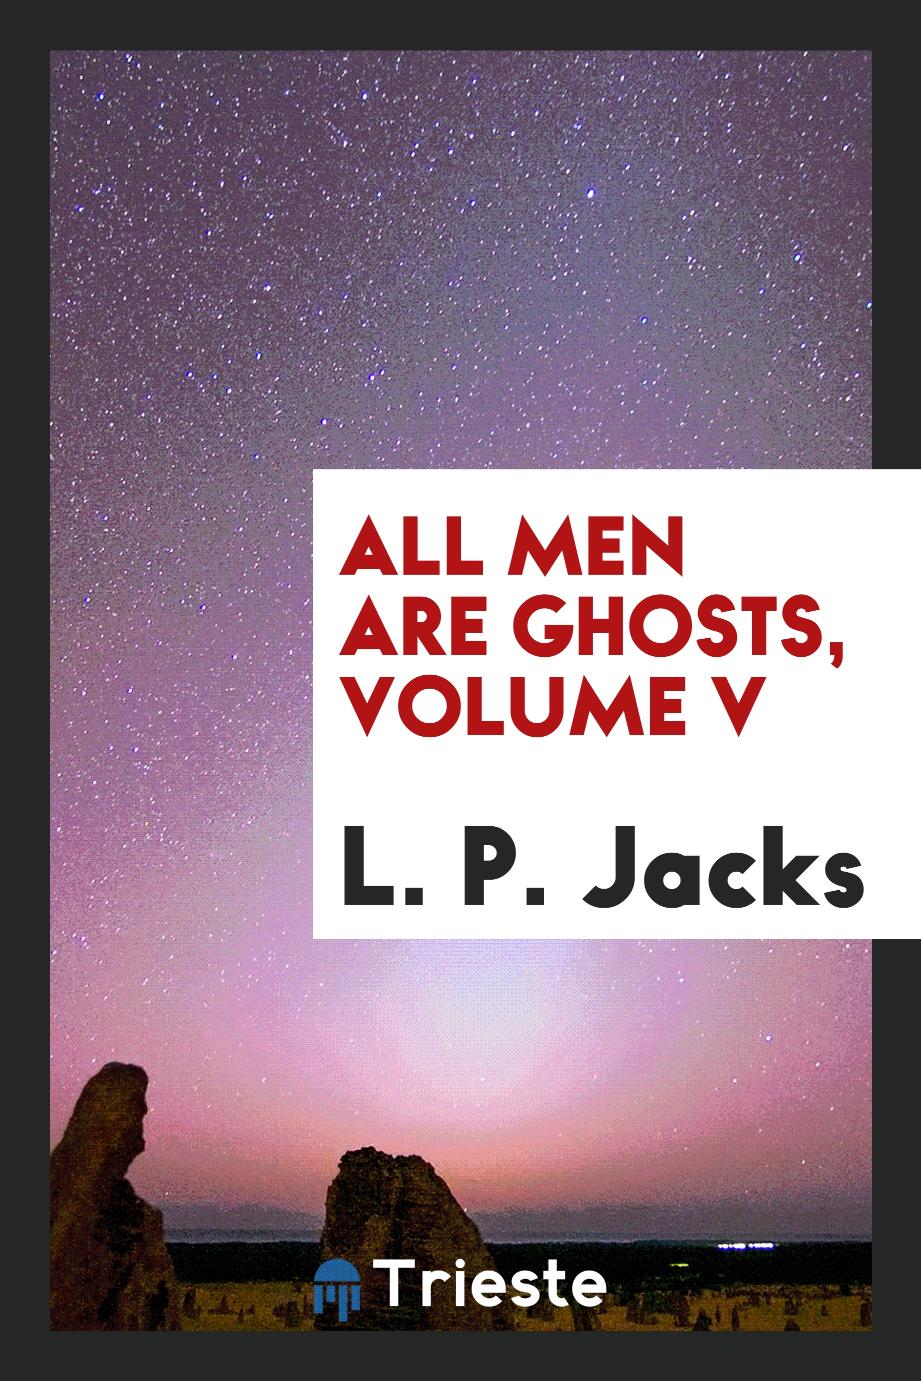 All men are ghosts, Volume V